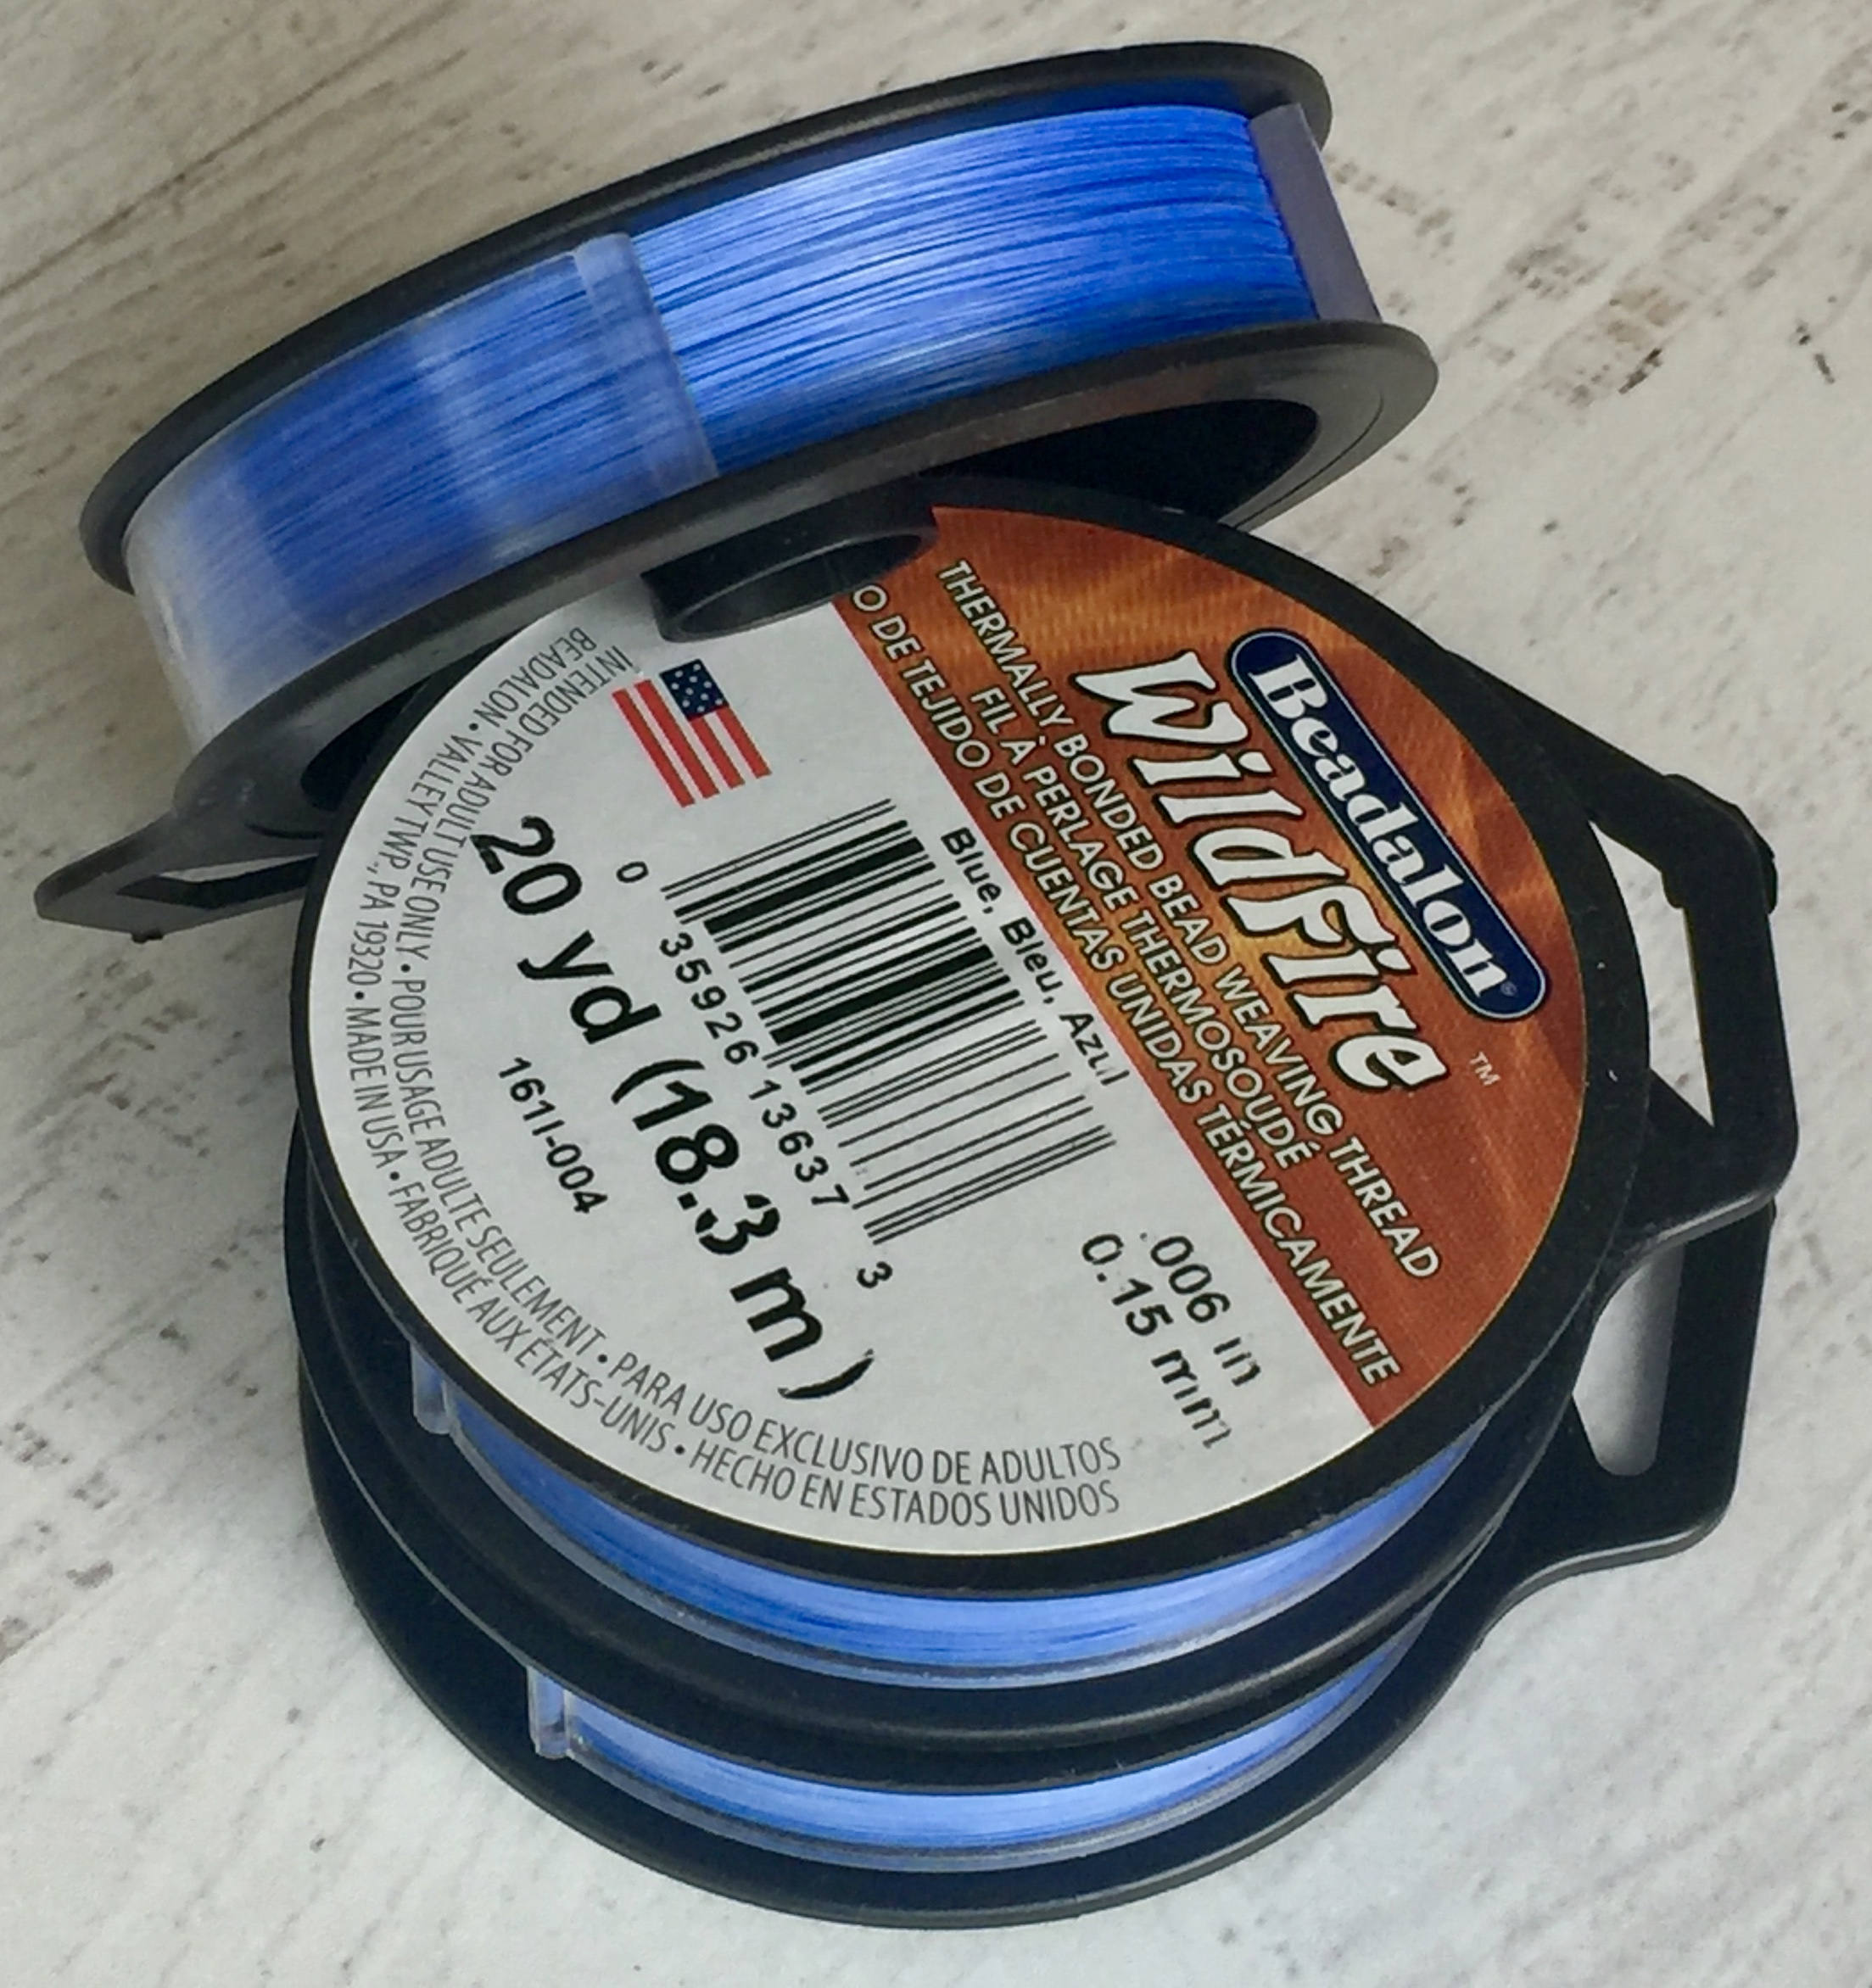 Wildfire Thread Blue .006 20 yards - Jewel Loom